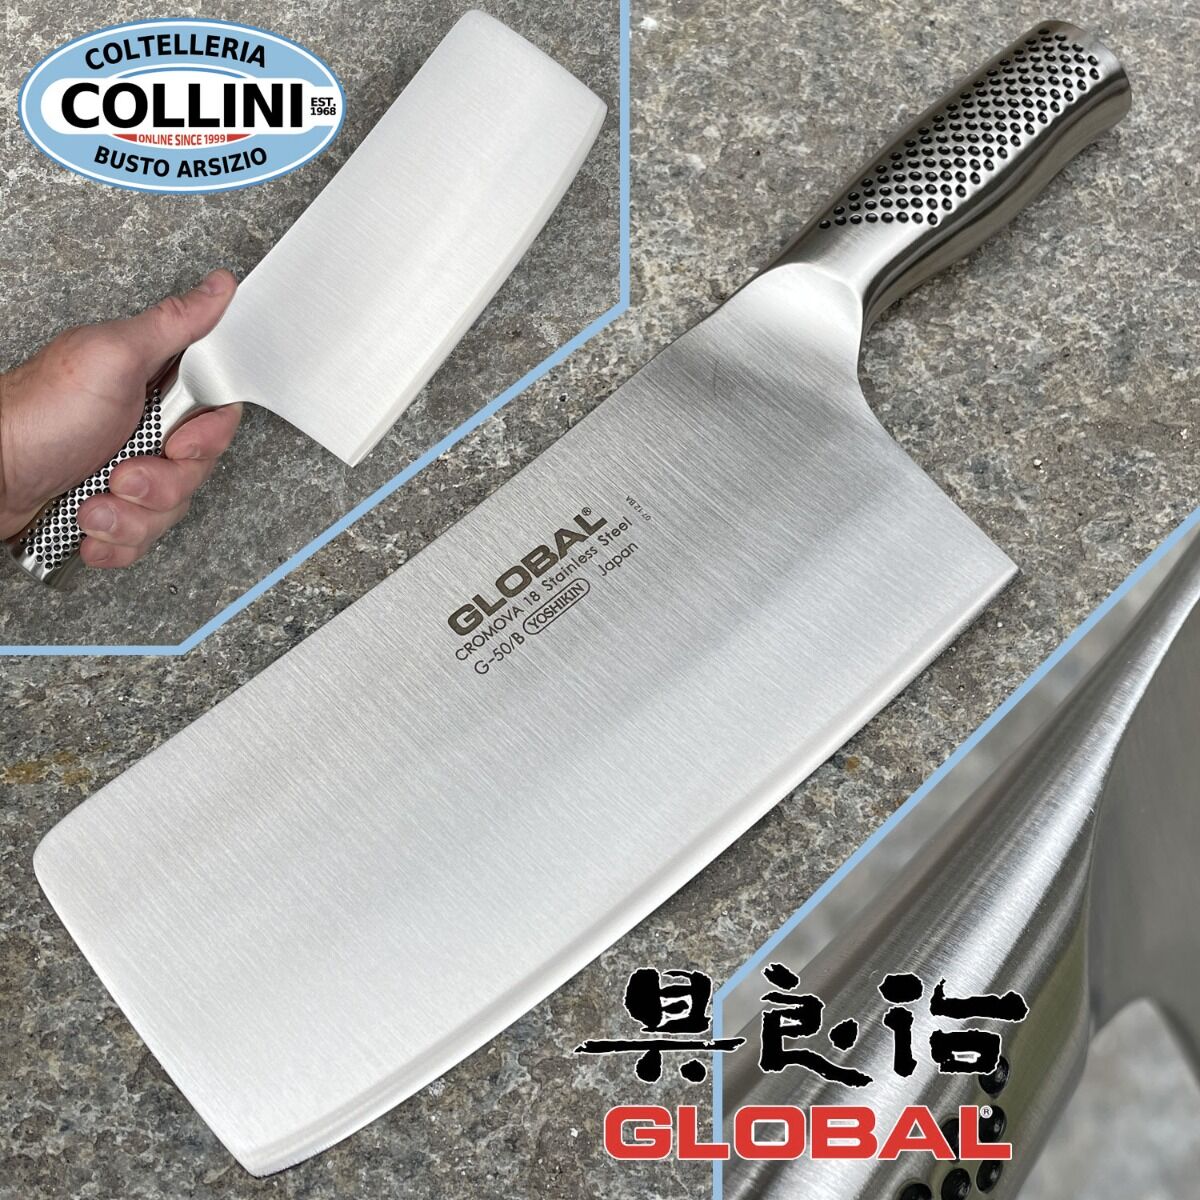 https://www.coltelleriacollini.com/media/catalog/product/cache/2d742e981ffa5c28990fe05a9b6044c9/image/13817978b/global-knives-g50-b-chop-and-slice-knife-gr-580-kitchen-knife.jpg